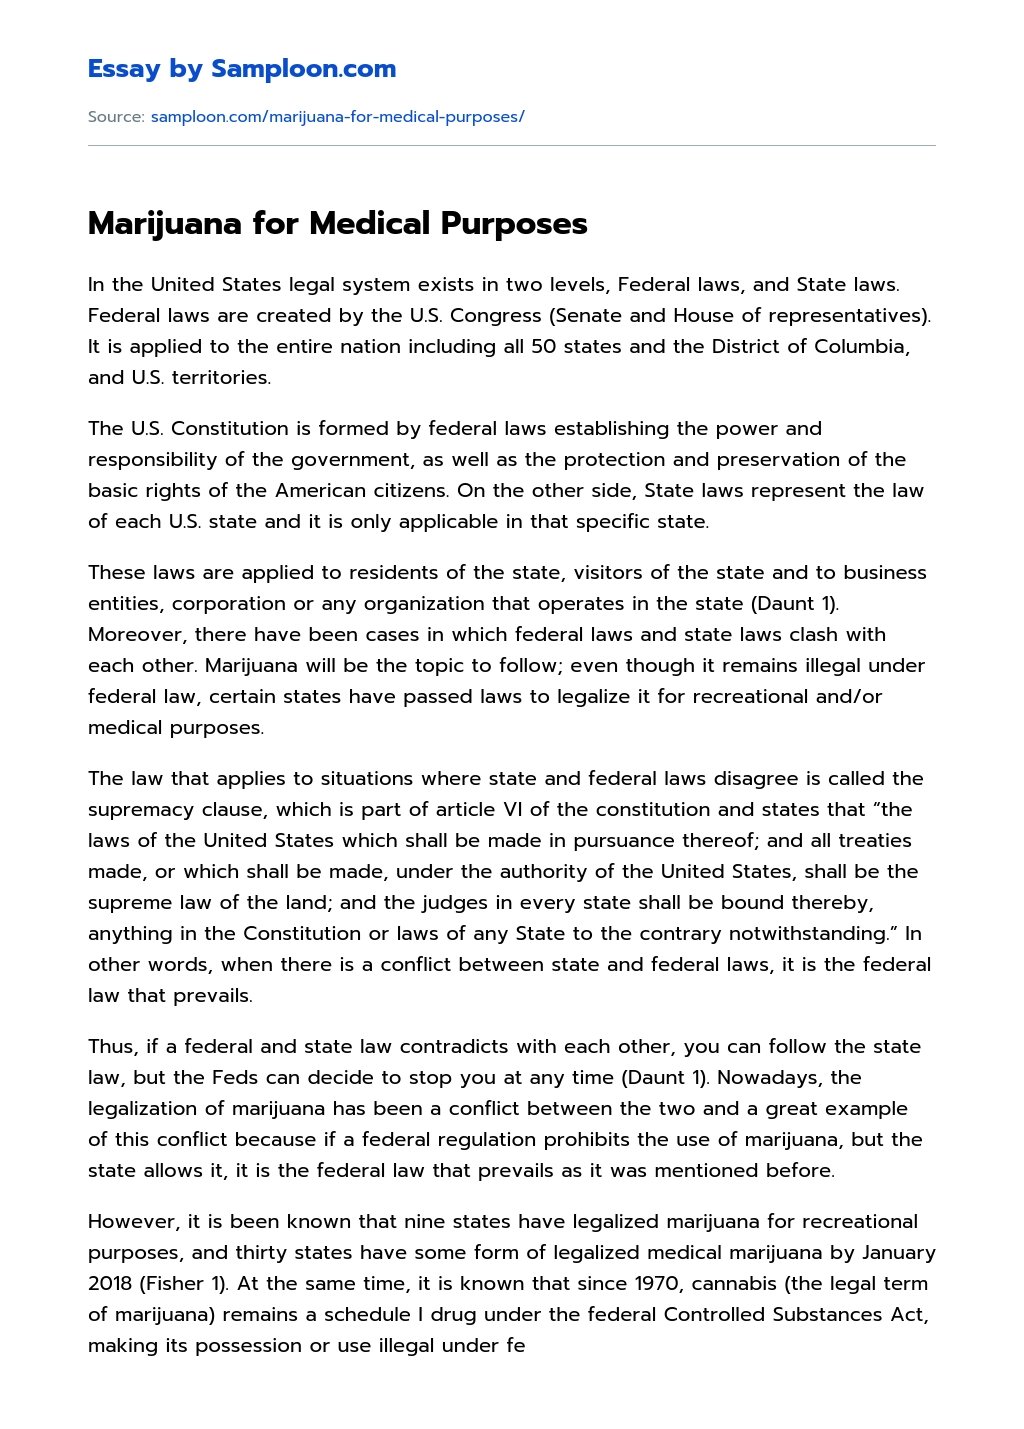 Marijuana for Medical Purposes essay